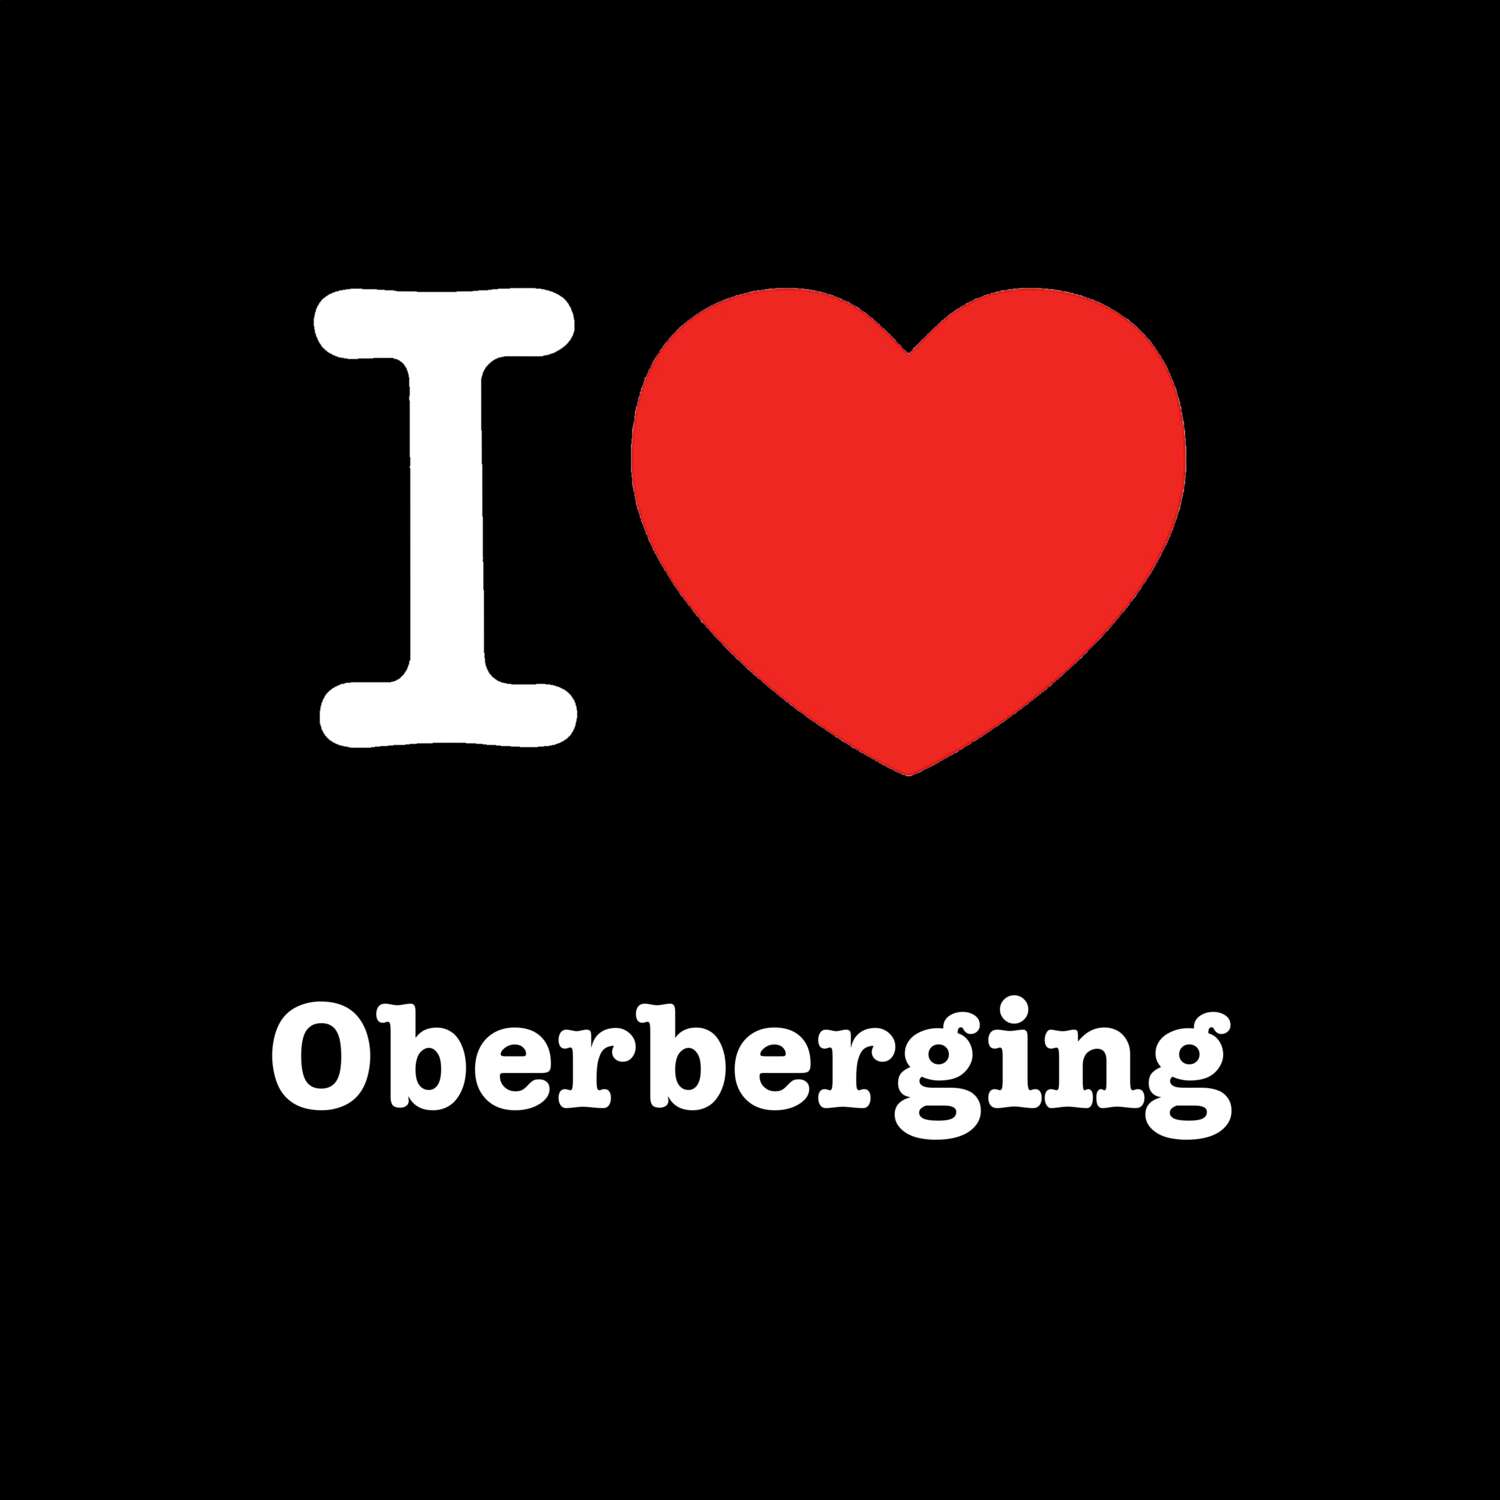 Oberberging T-Shirt »I love«